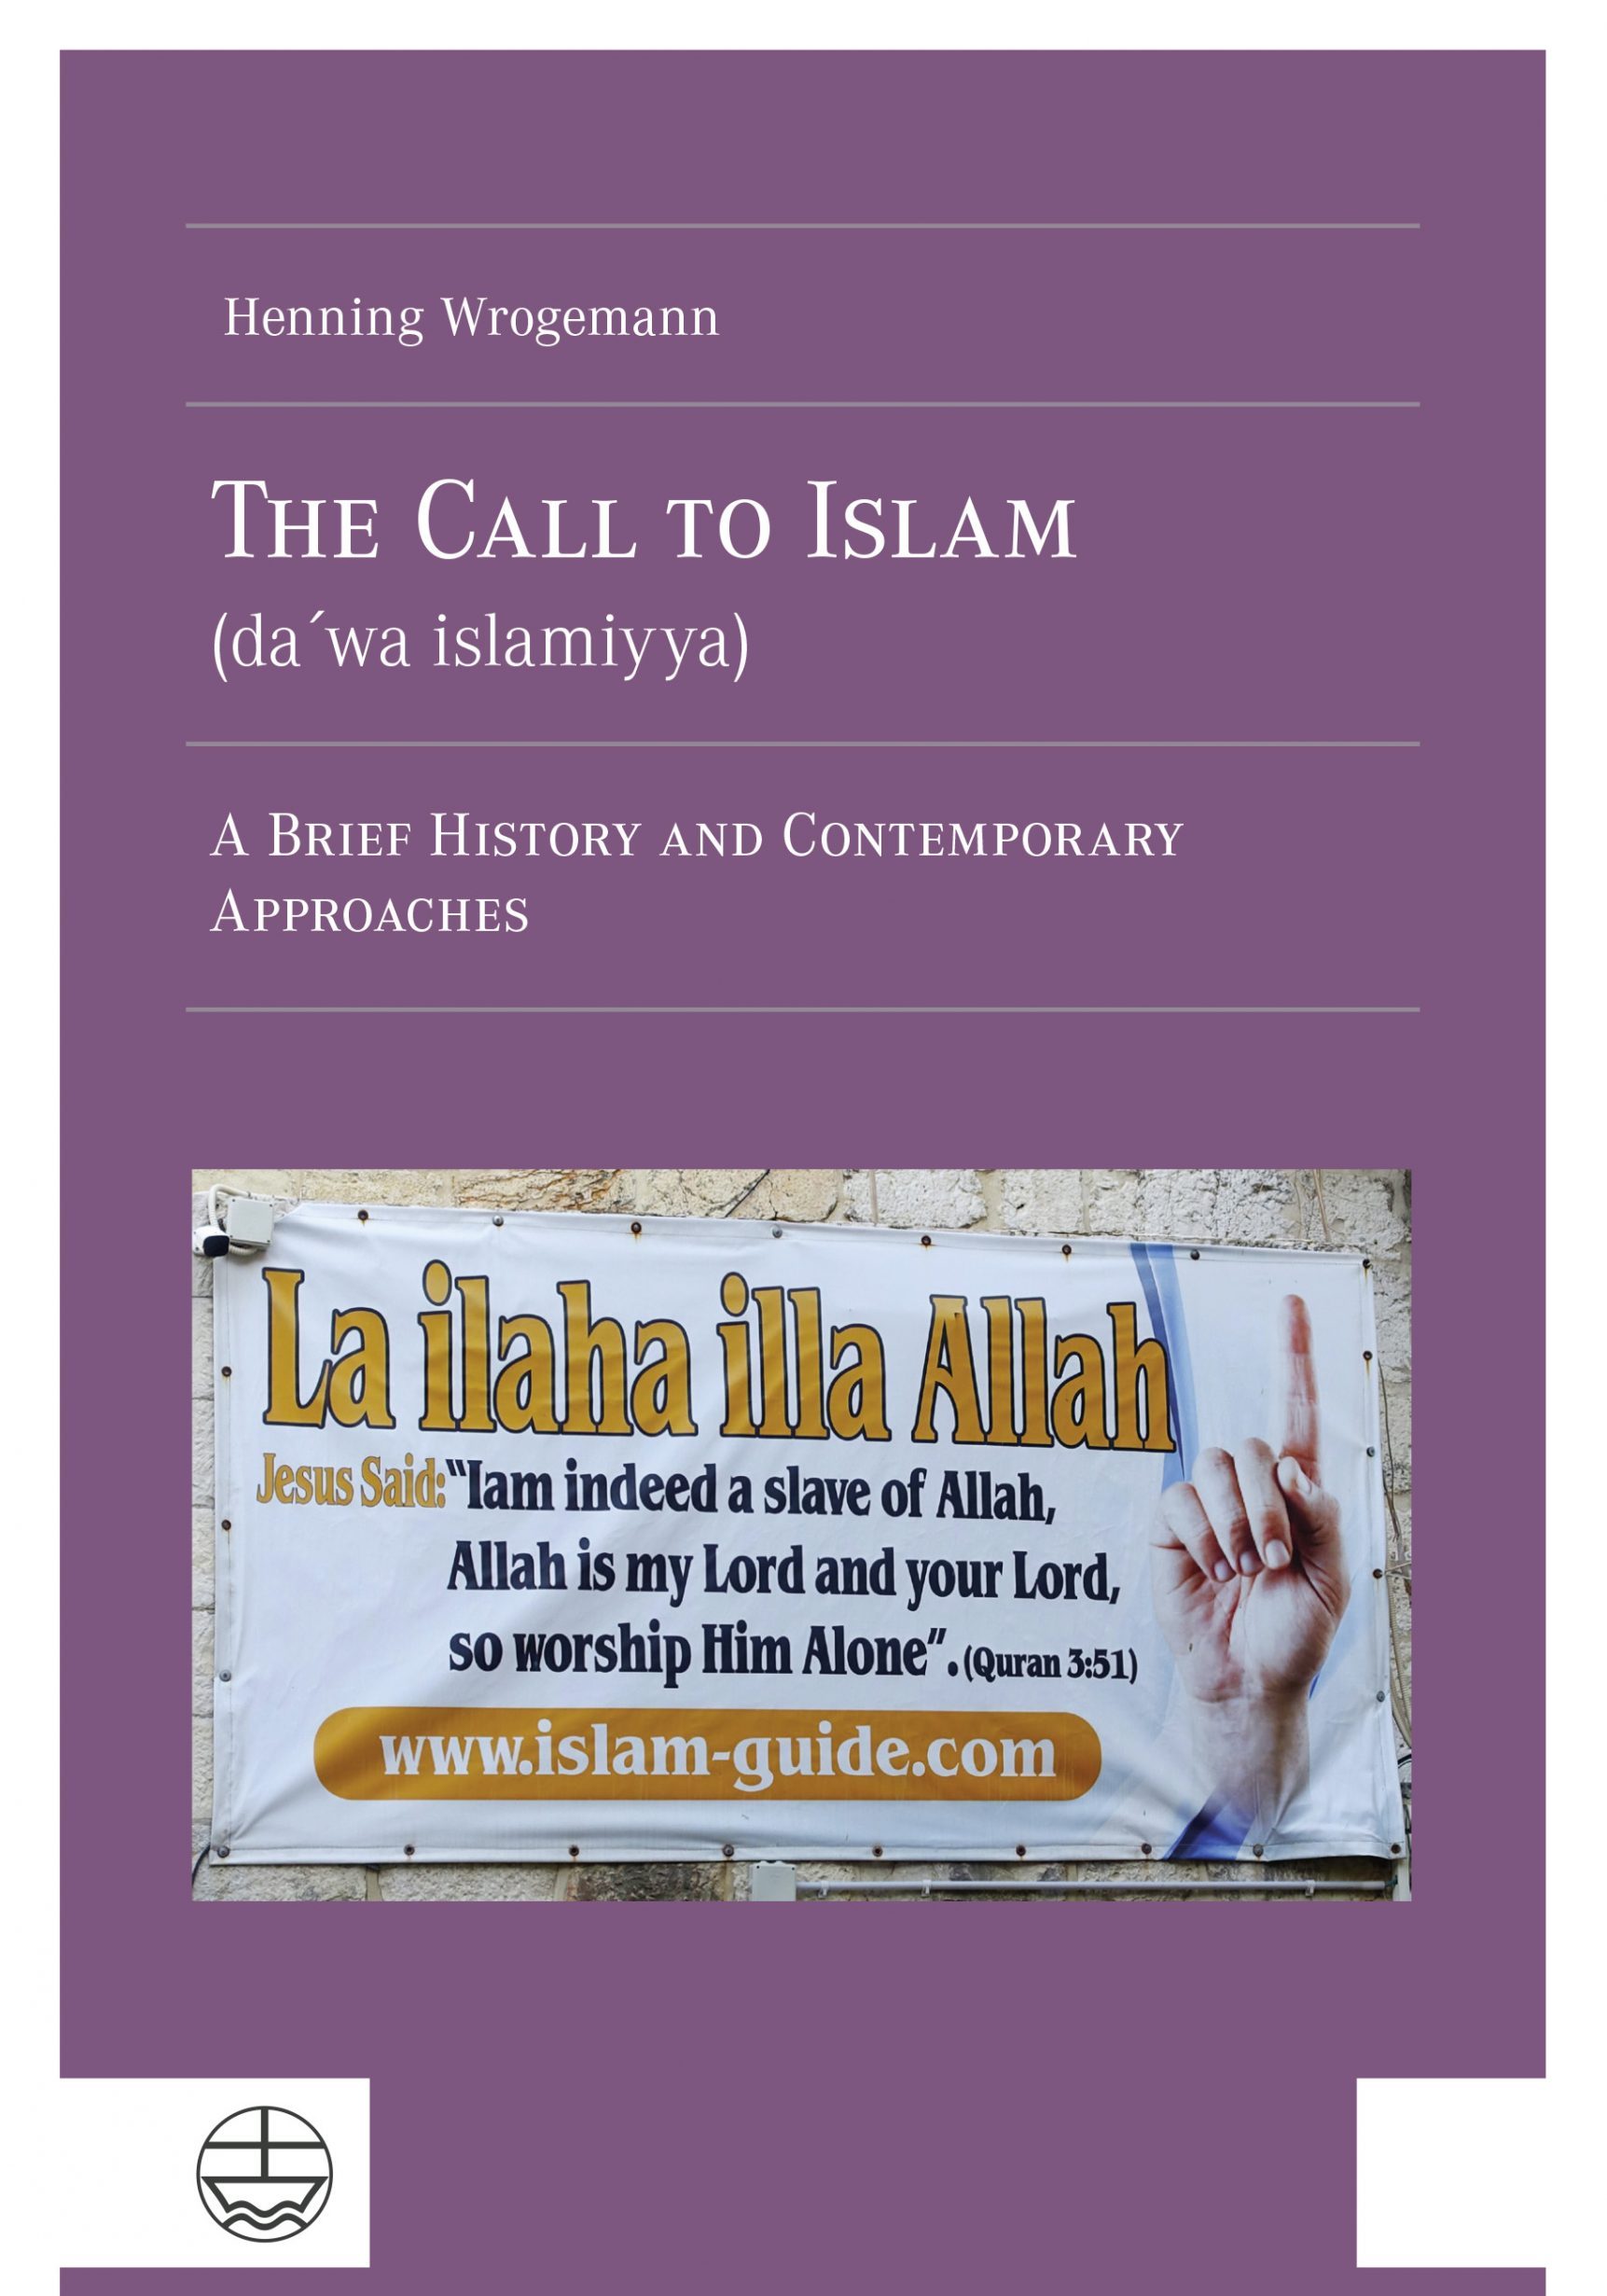 Bild zum Beitrag The Call to Islam (daʻwa islamiyya). A Brief History and Contemporary Approaches